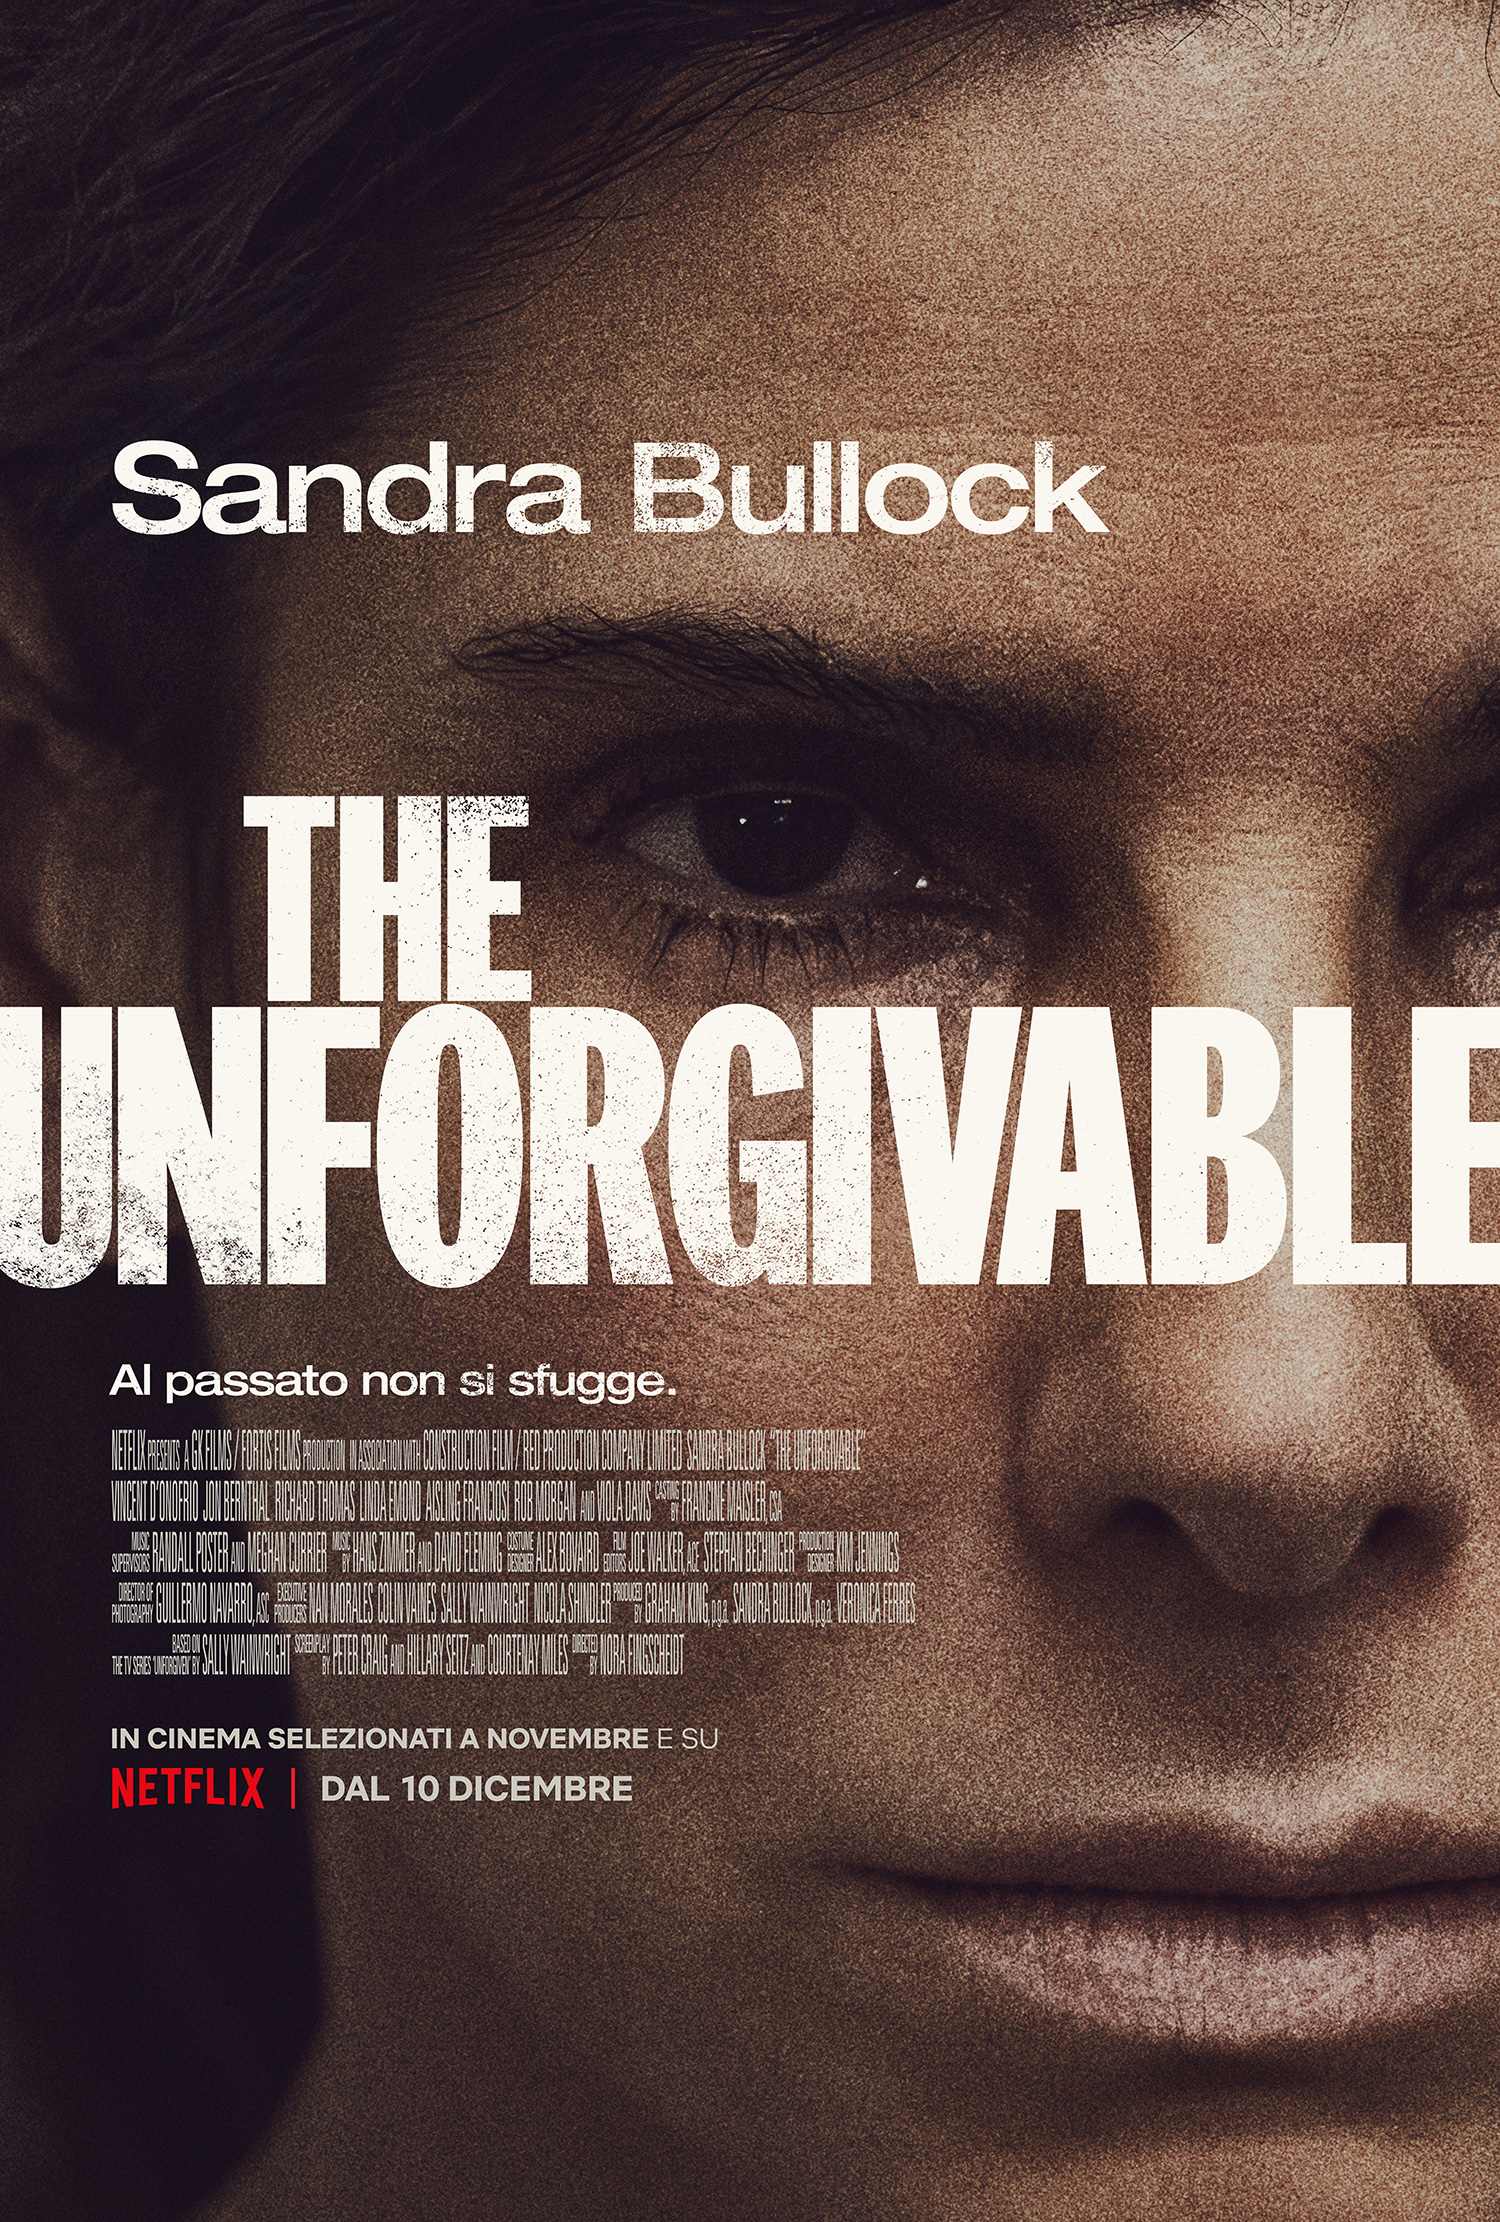 With Sandra Bullock on Netflix starting December 10, Trailer